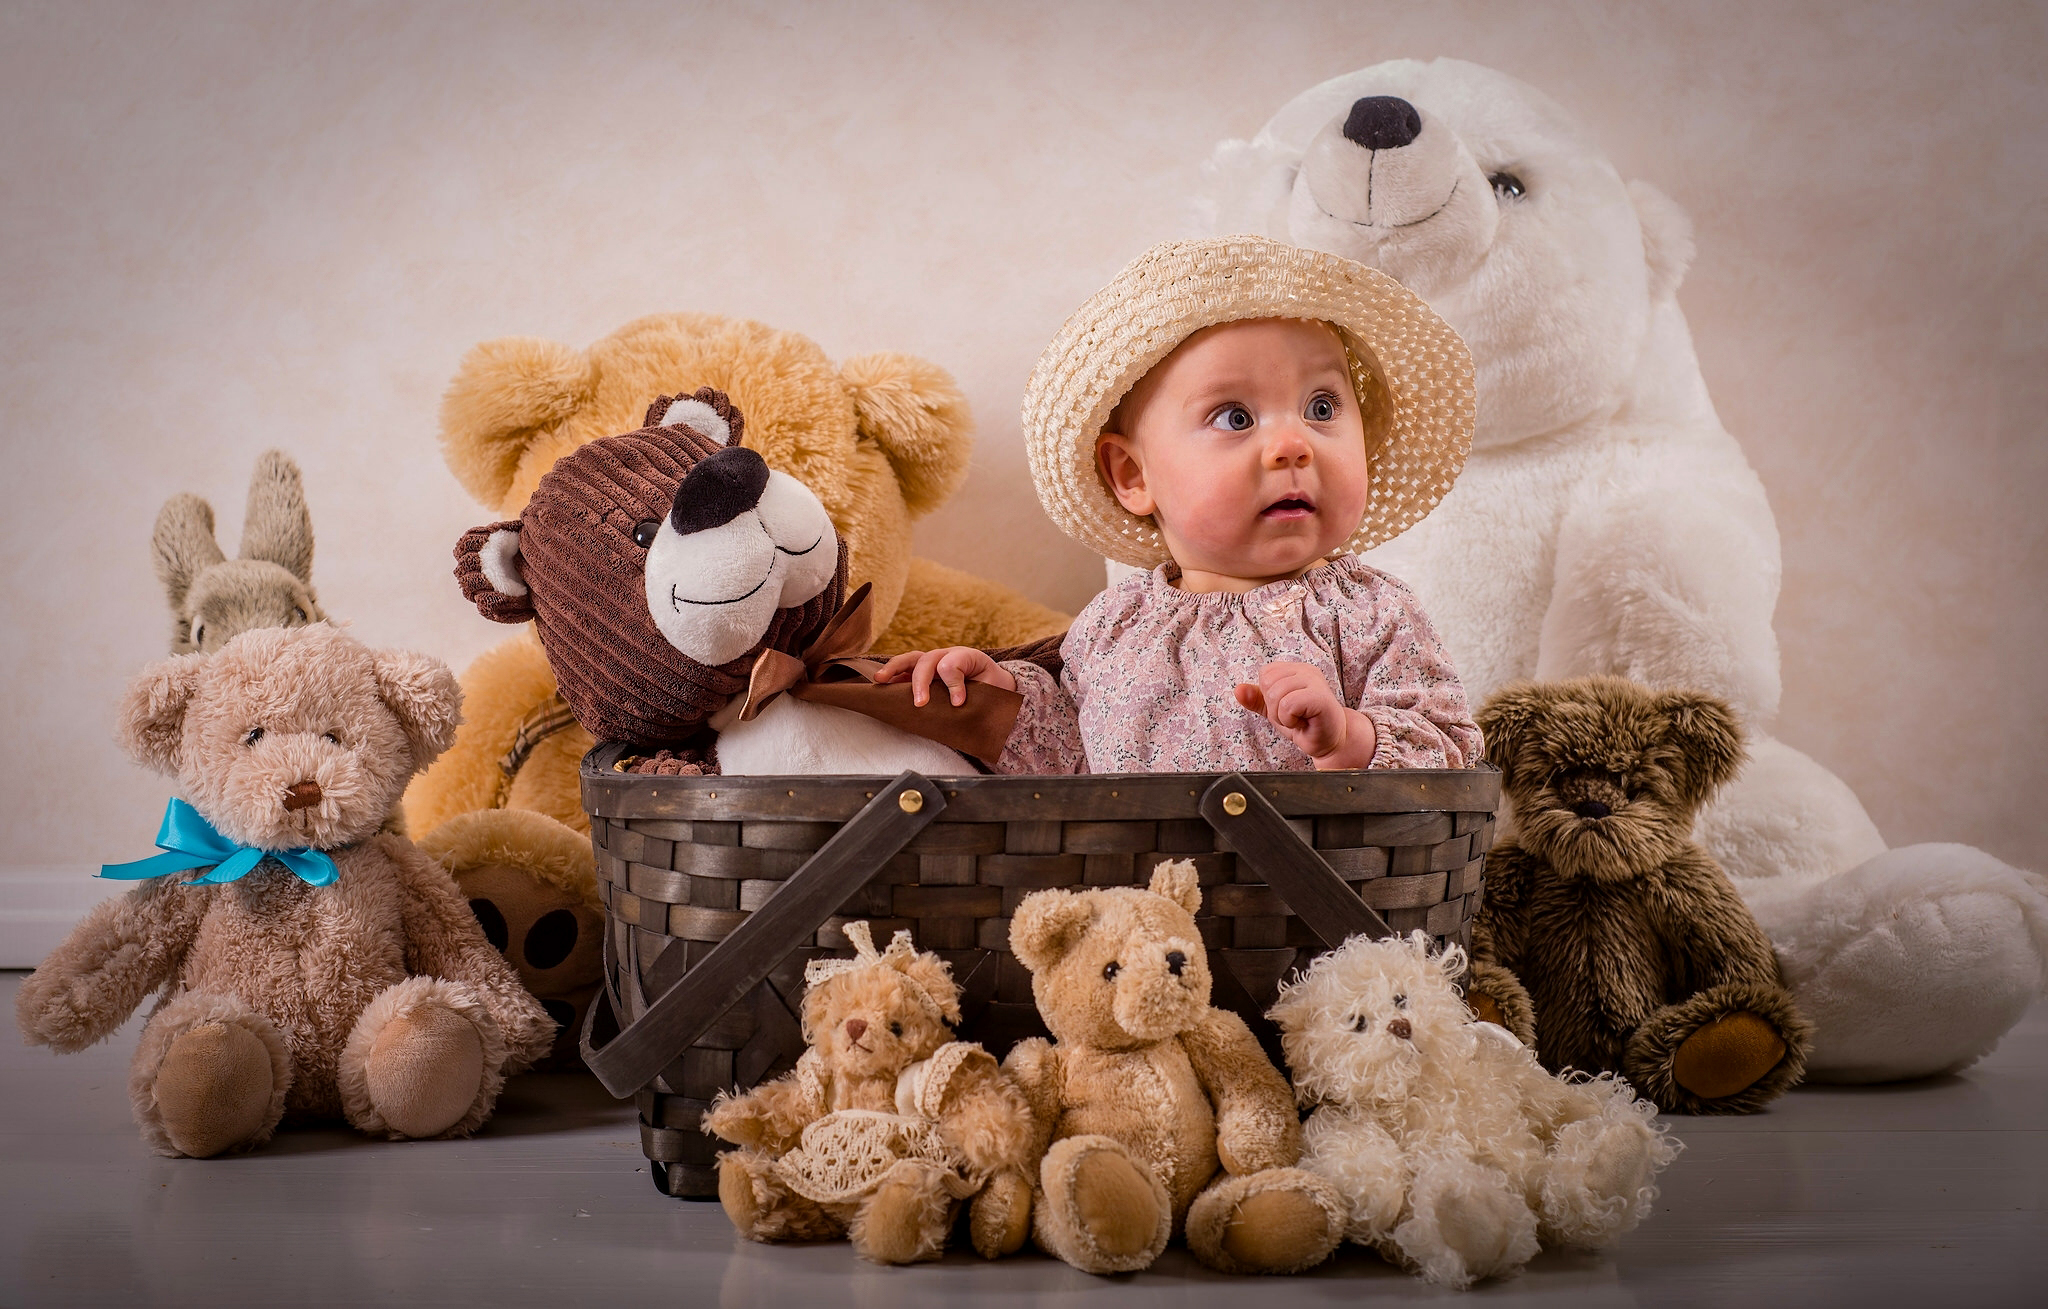 HD photos baby, teddy bear, stuffed animal, hat